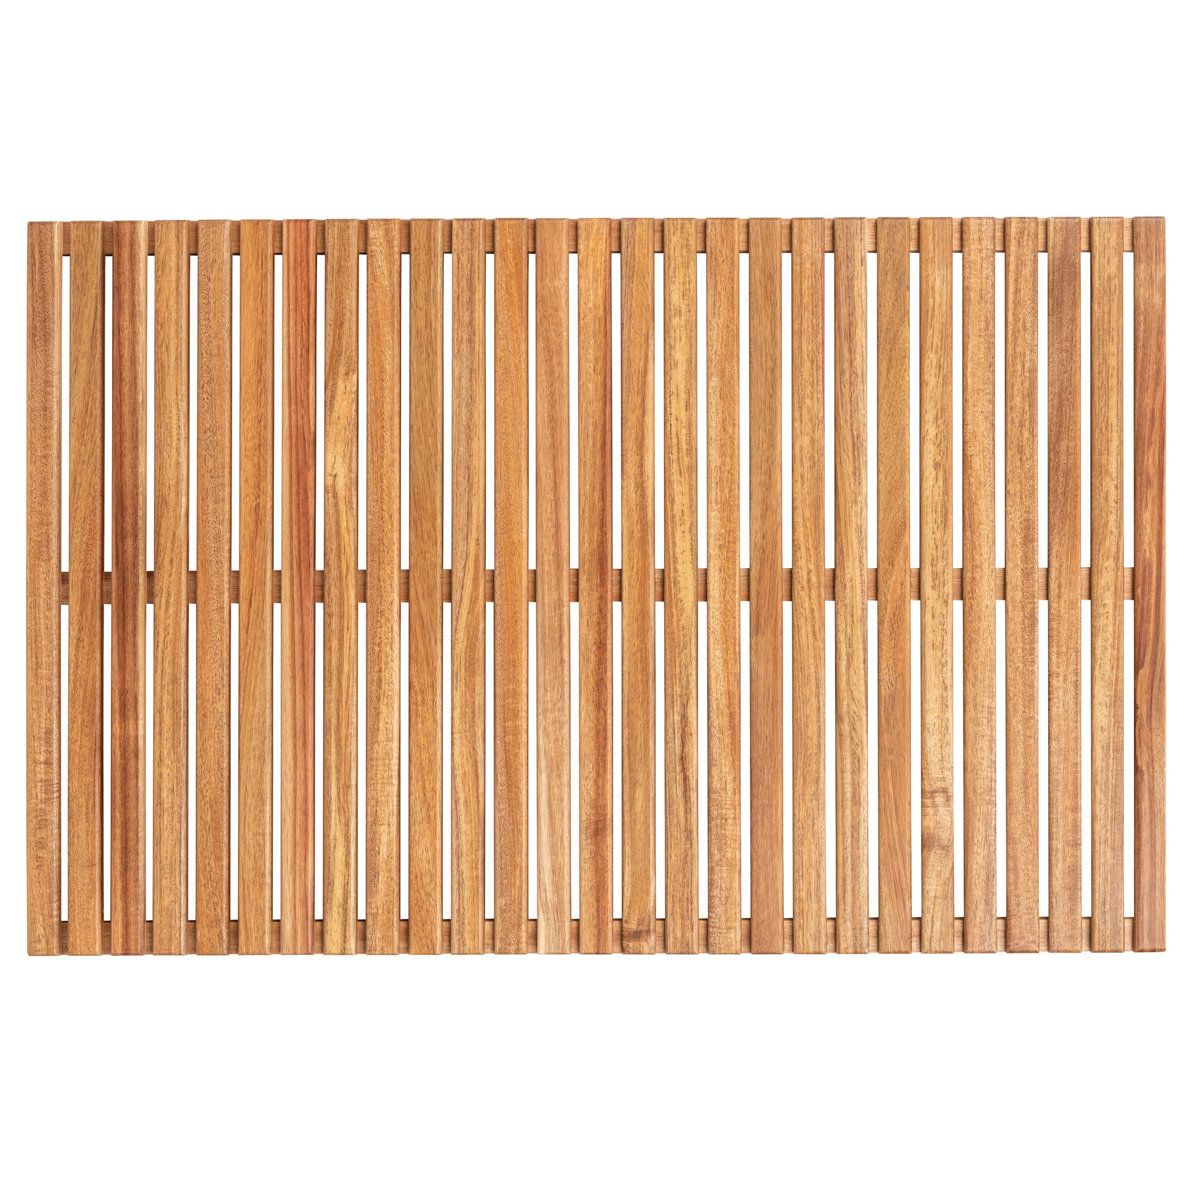 Dřevěná terasová dlažba, akatové dřevo, 55 x 85 cm, WENKO - EDAXO.CZ s.r.o.